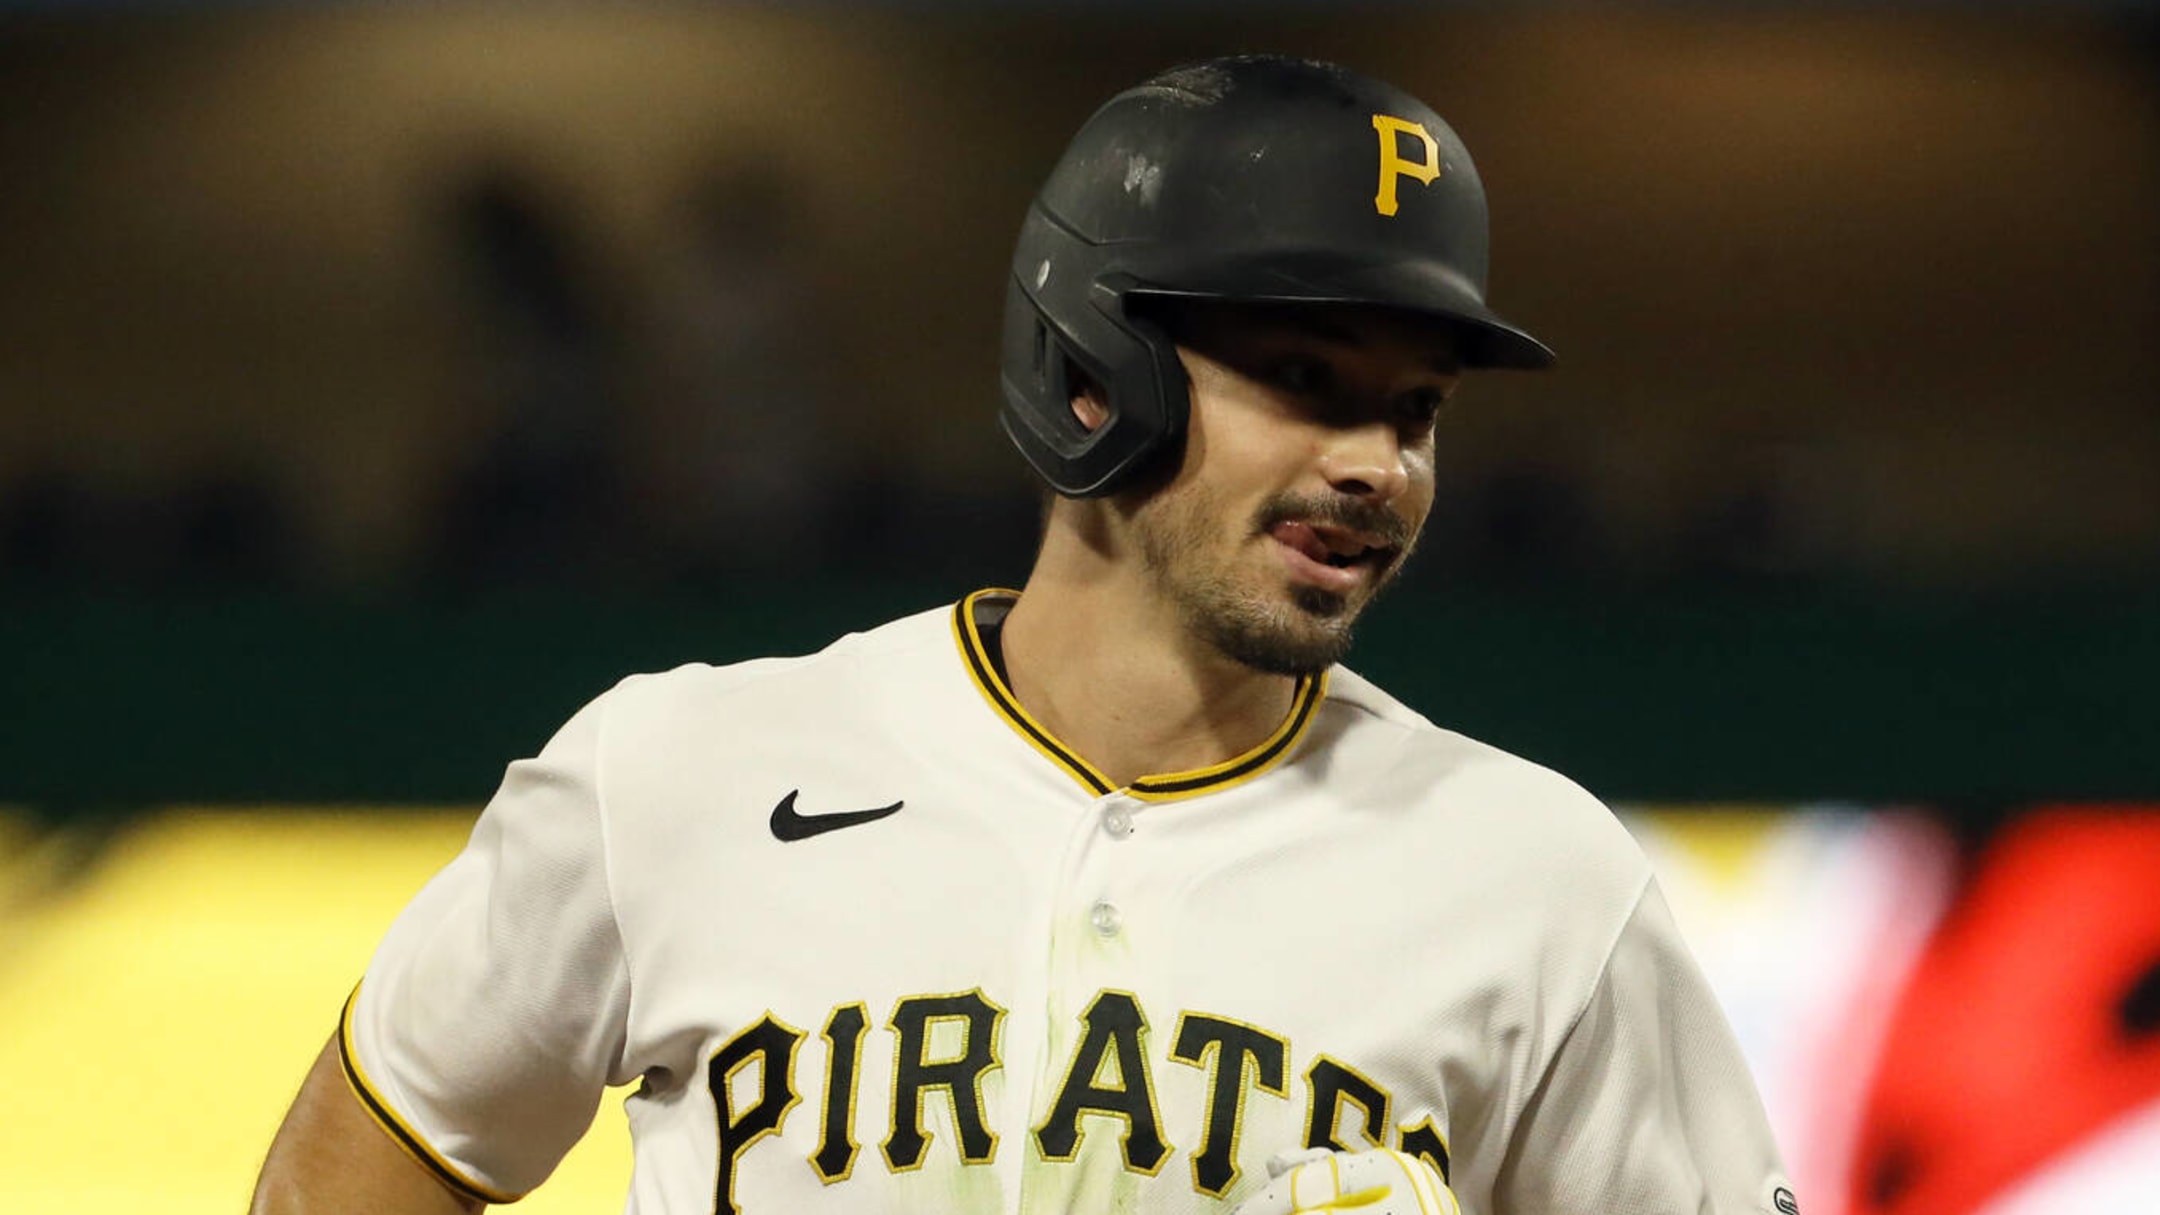 Pirates Extend Bryan Reynolds - MLB Trade Rumors